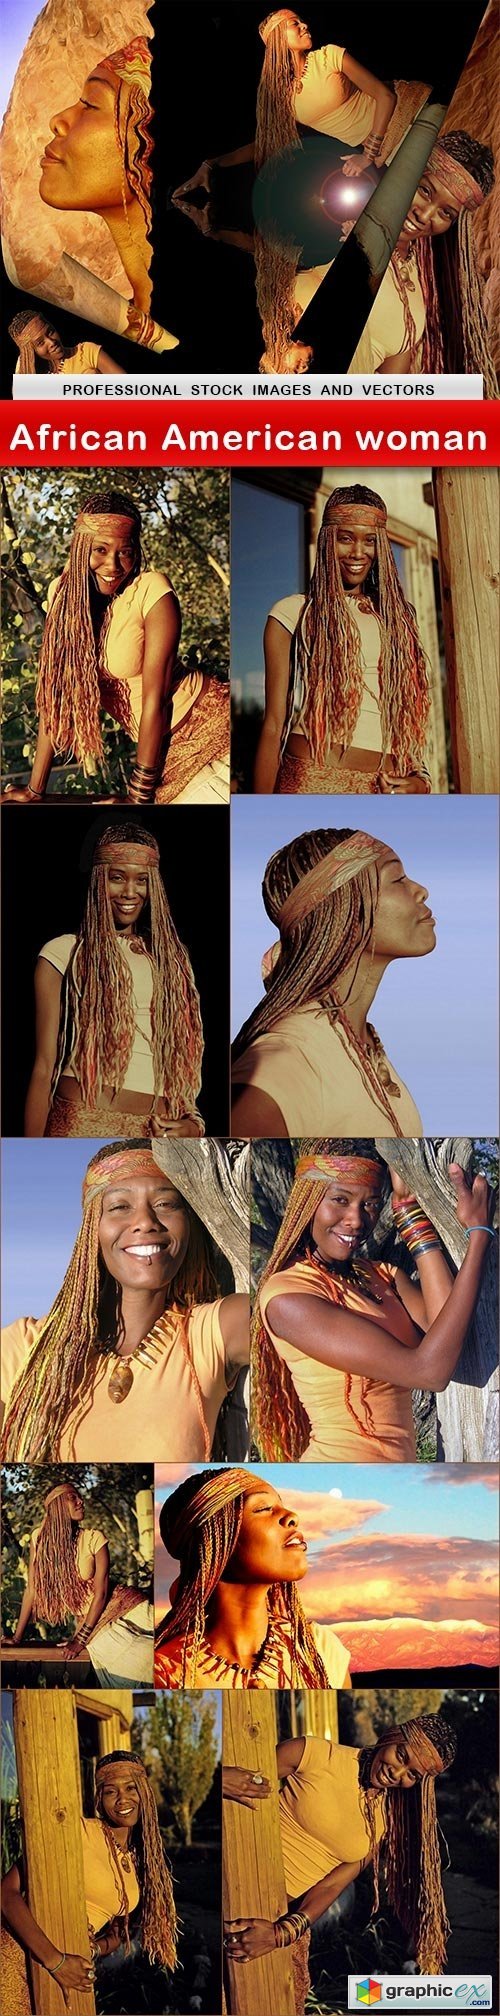 African American woman - 11 UHQ JPEG